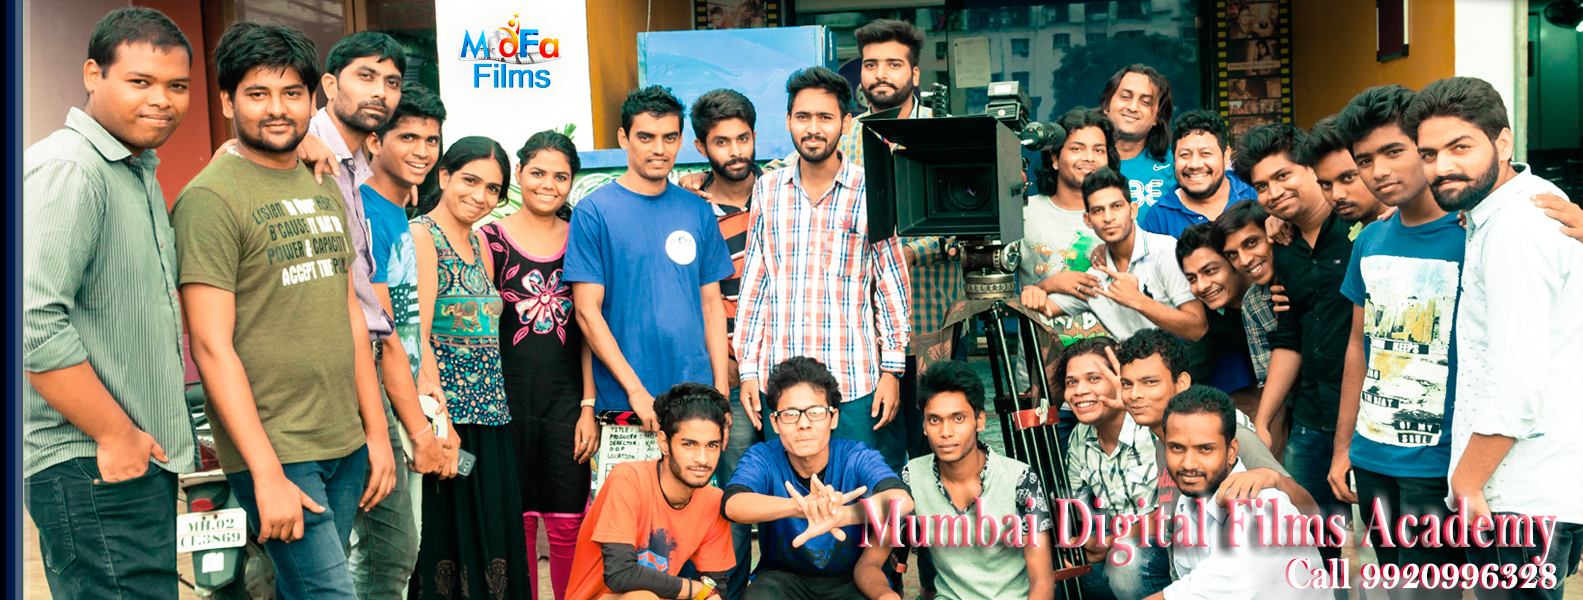 film editing classes in mumbai